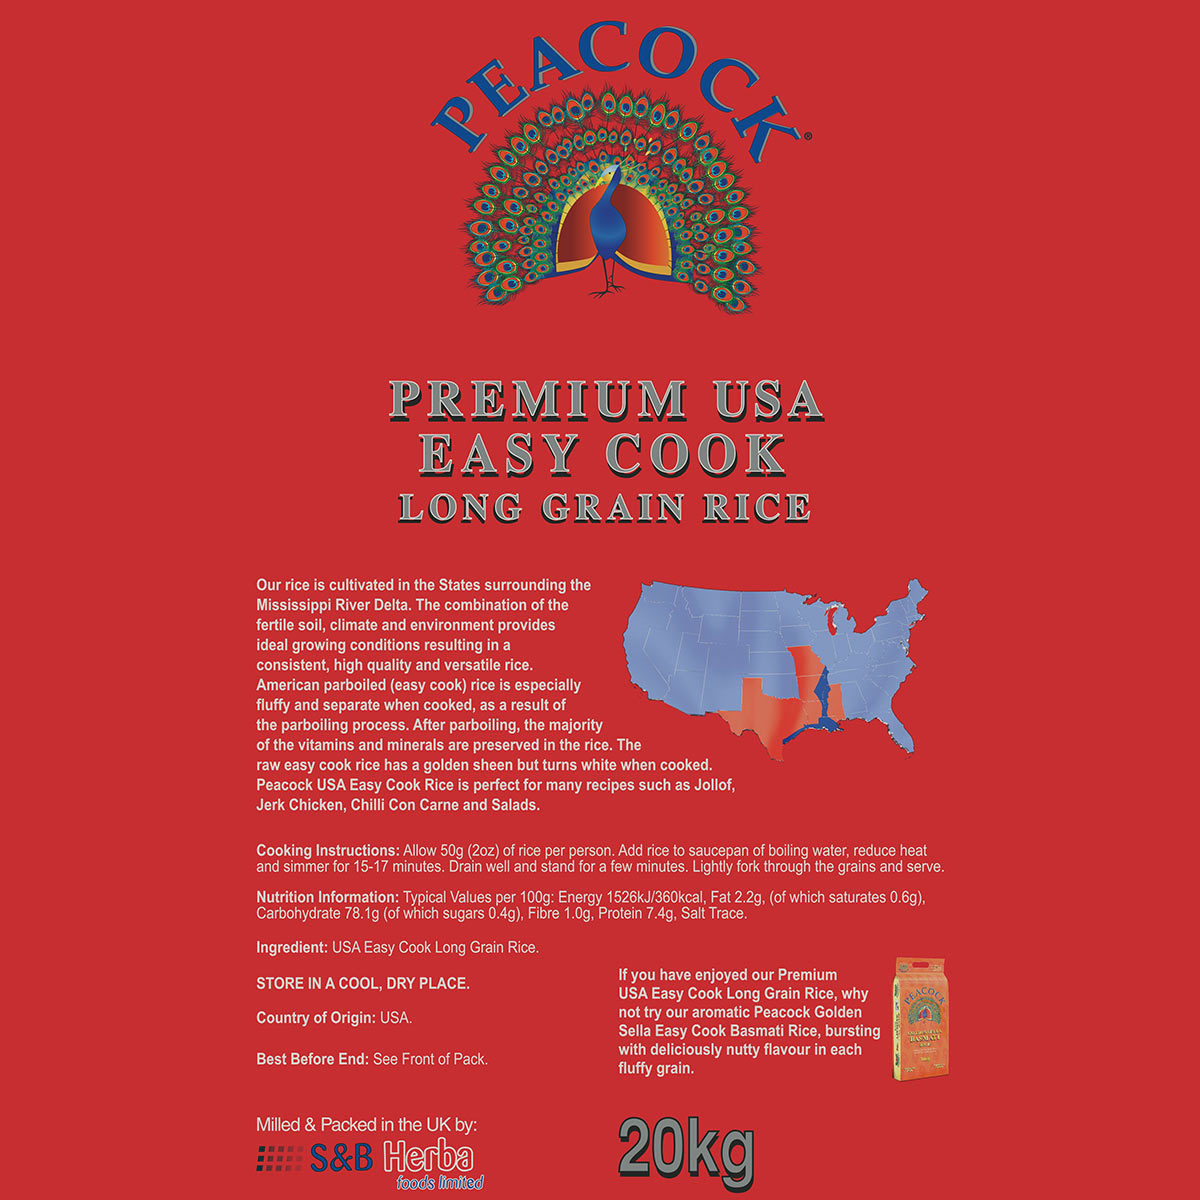 Peacock Premium USA Easy Cook Long Grain Rice, 20kg